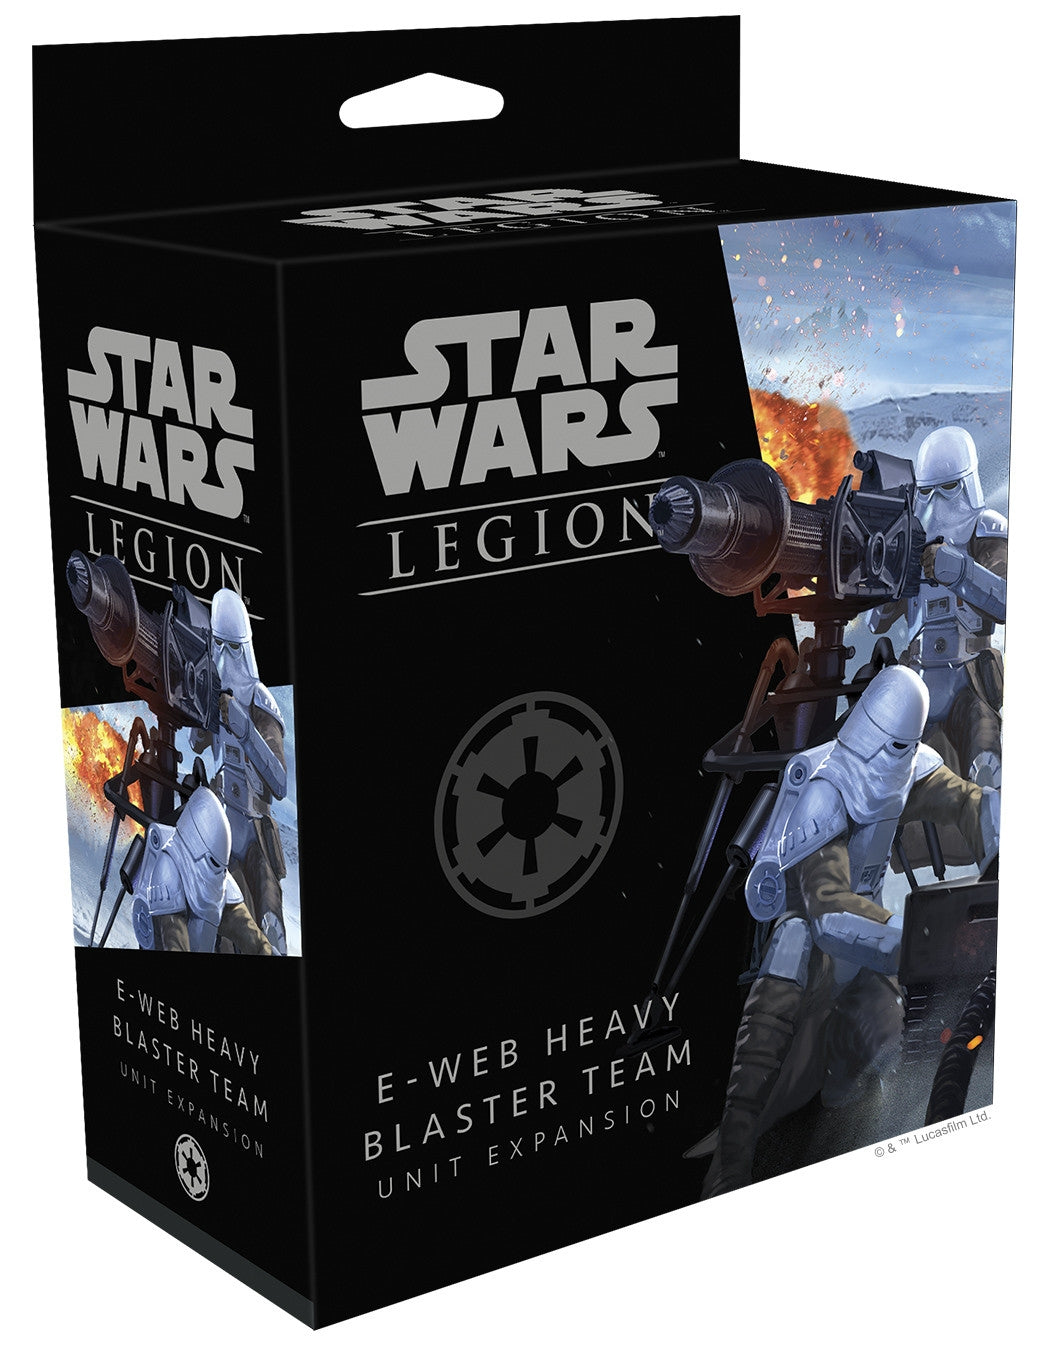 E-Web Heavy Blaster Team Unit Expansion - Star Wars Legion